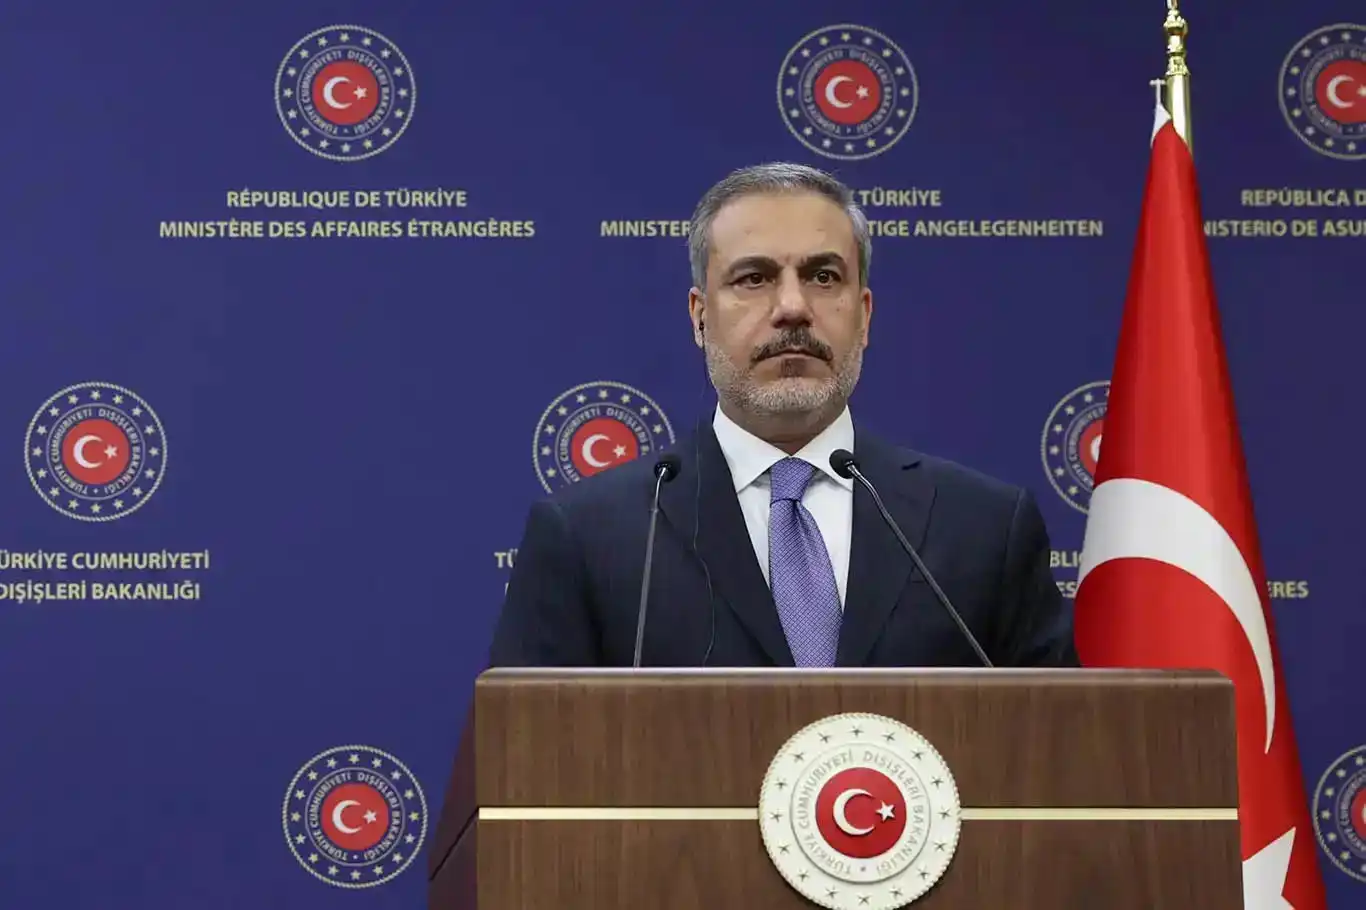 Türkiye's Foreign Minister to attend Riyadh meeting on Gaza